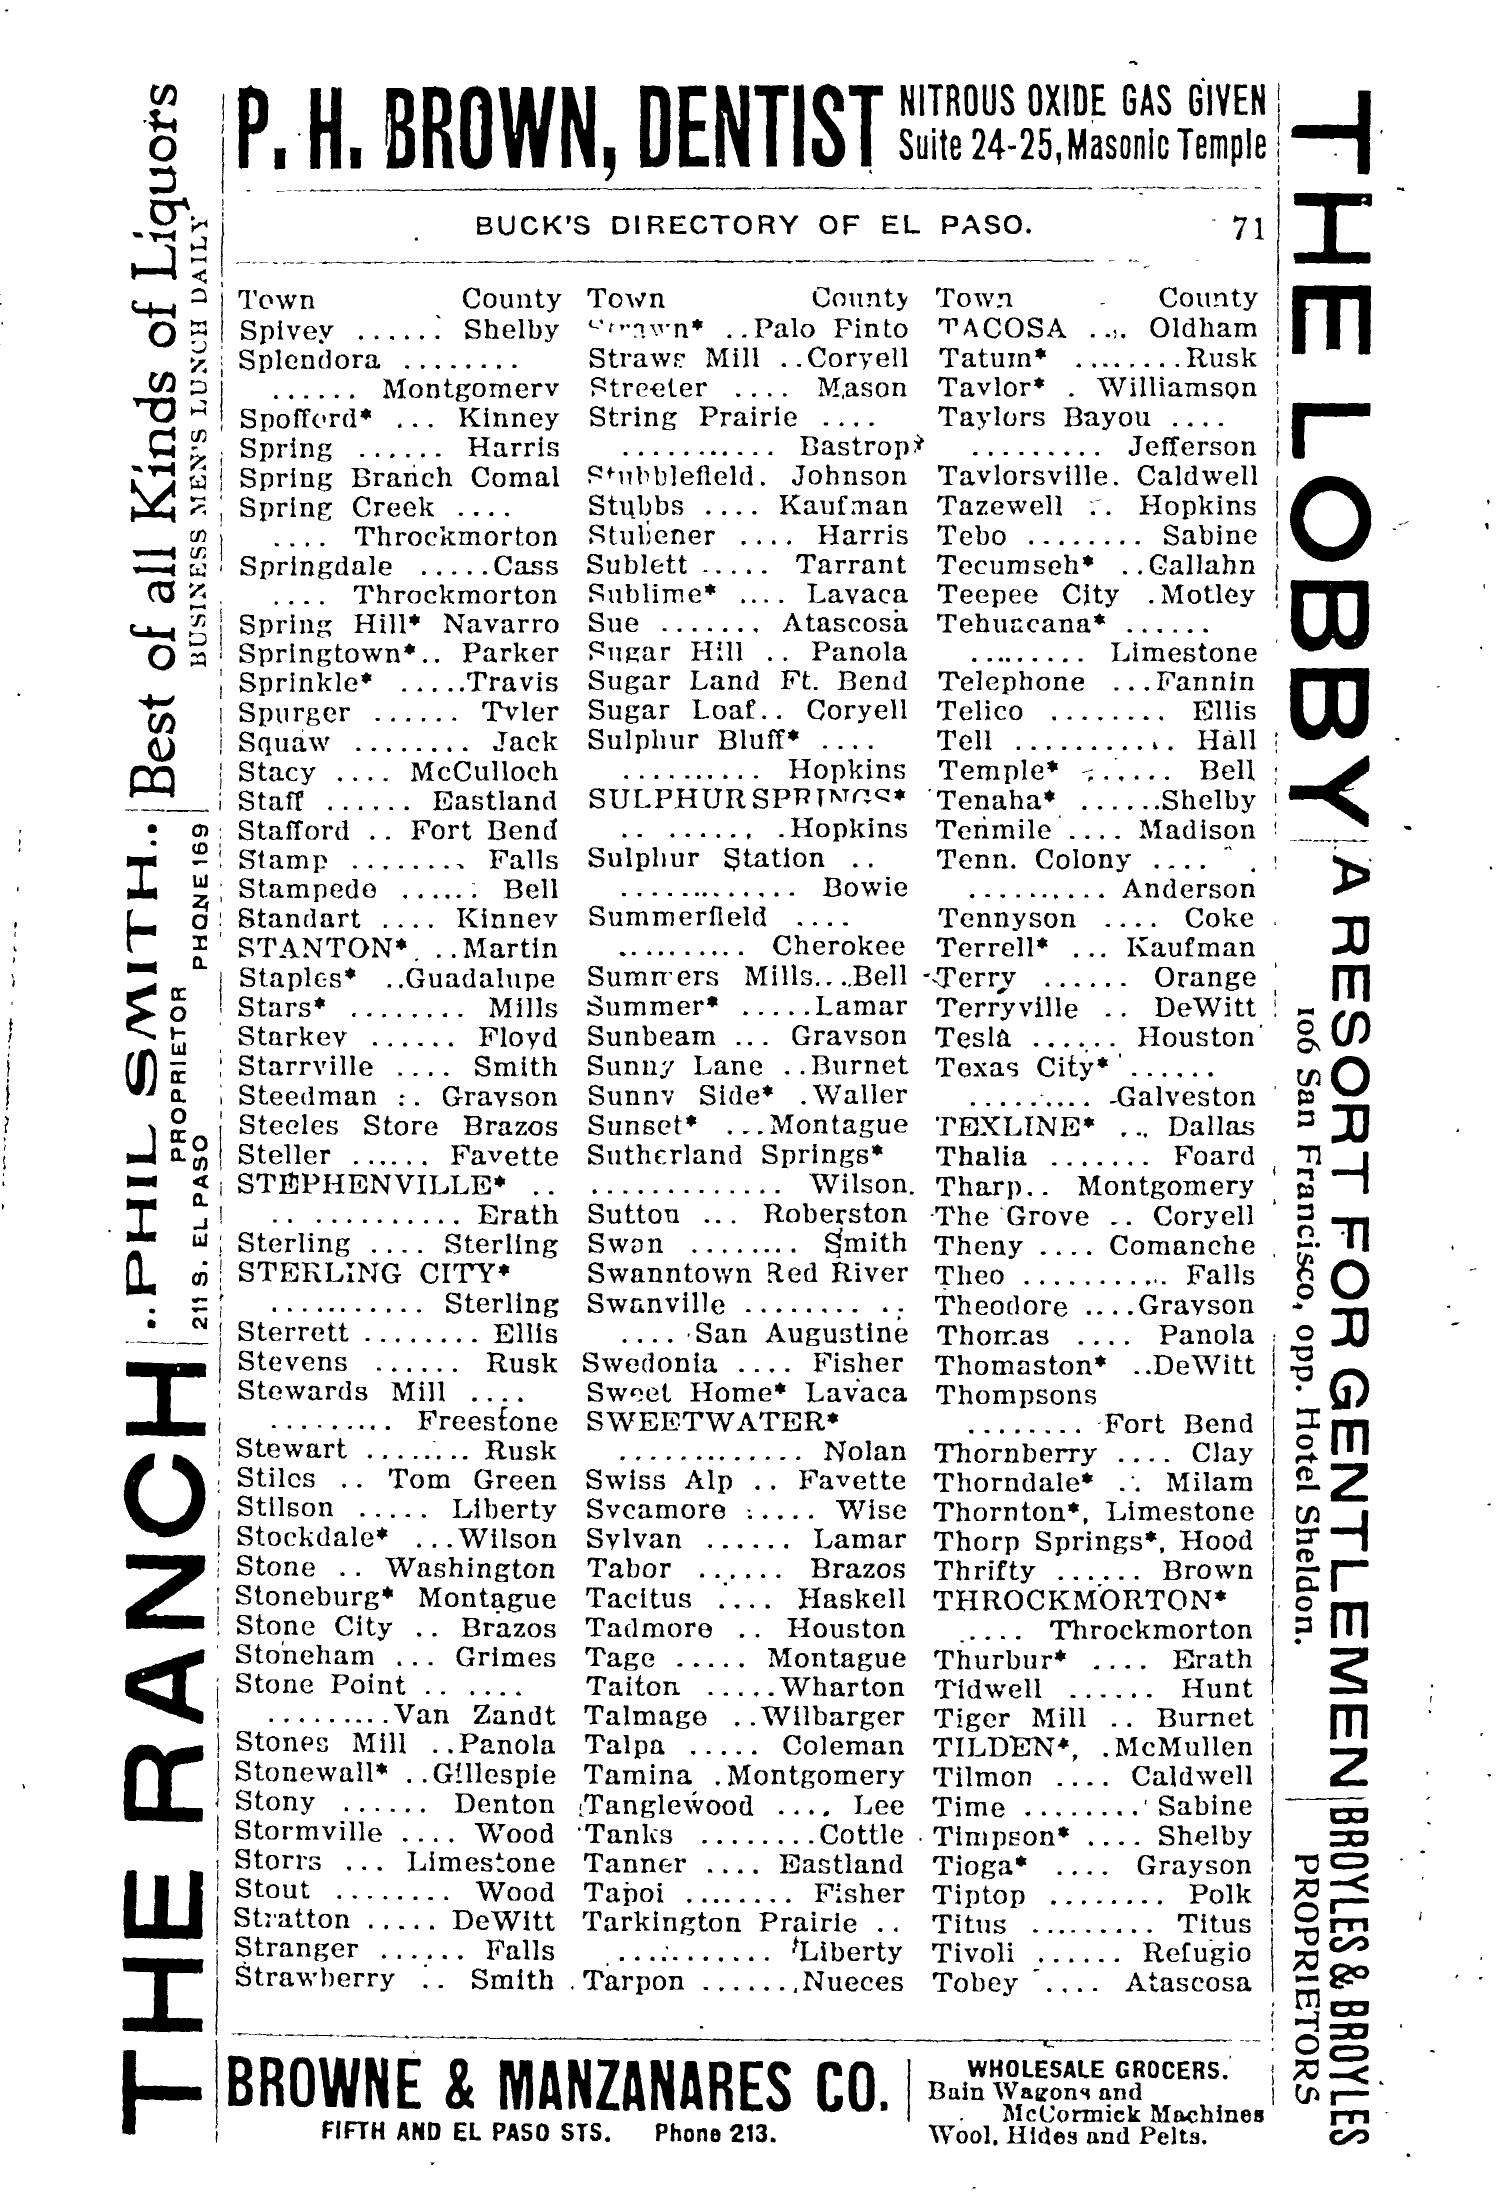 Buck's Directory of El Paso for 1902
                                                
                                                    71
                                                